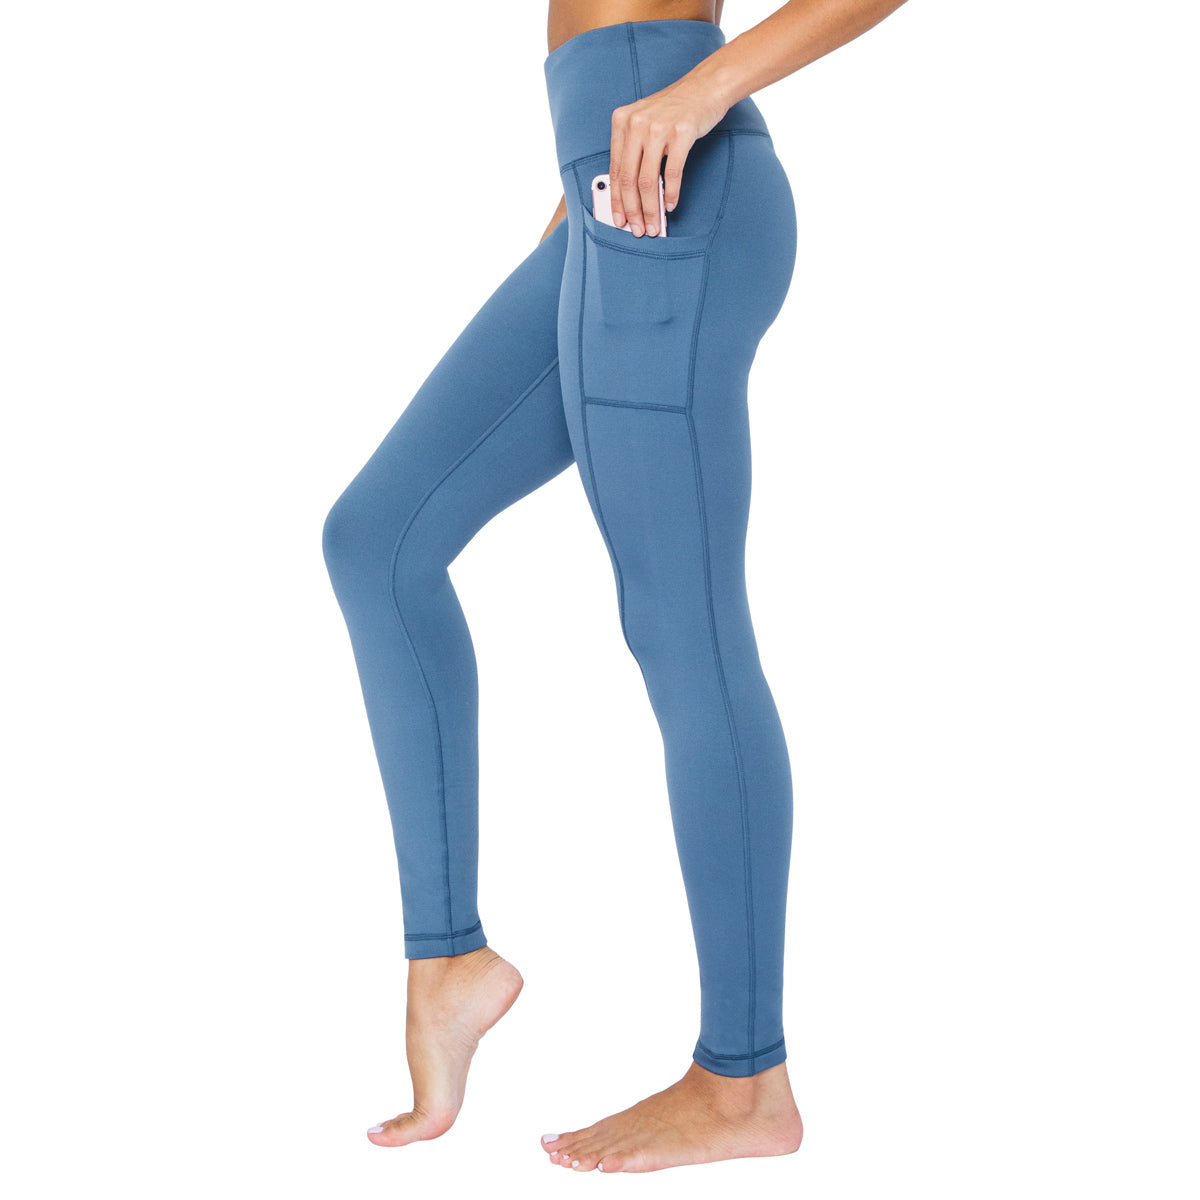 90 Degree By Reflex High Waist Power Flex Tummy Control Leggings - Bering  Sea - XS at  Women's Clothing store